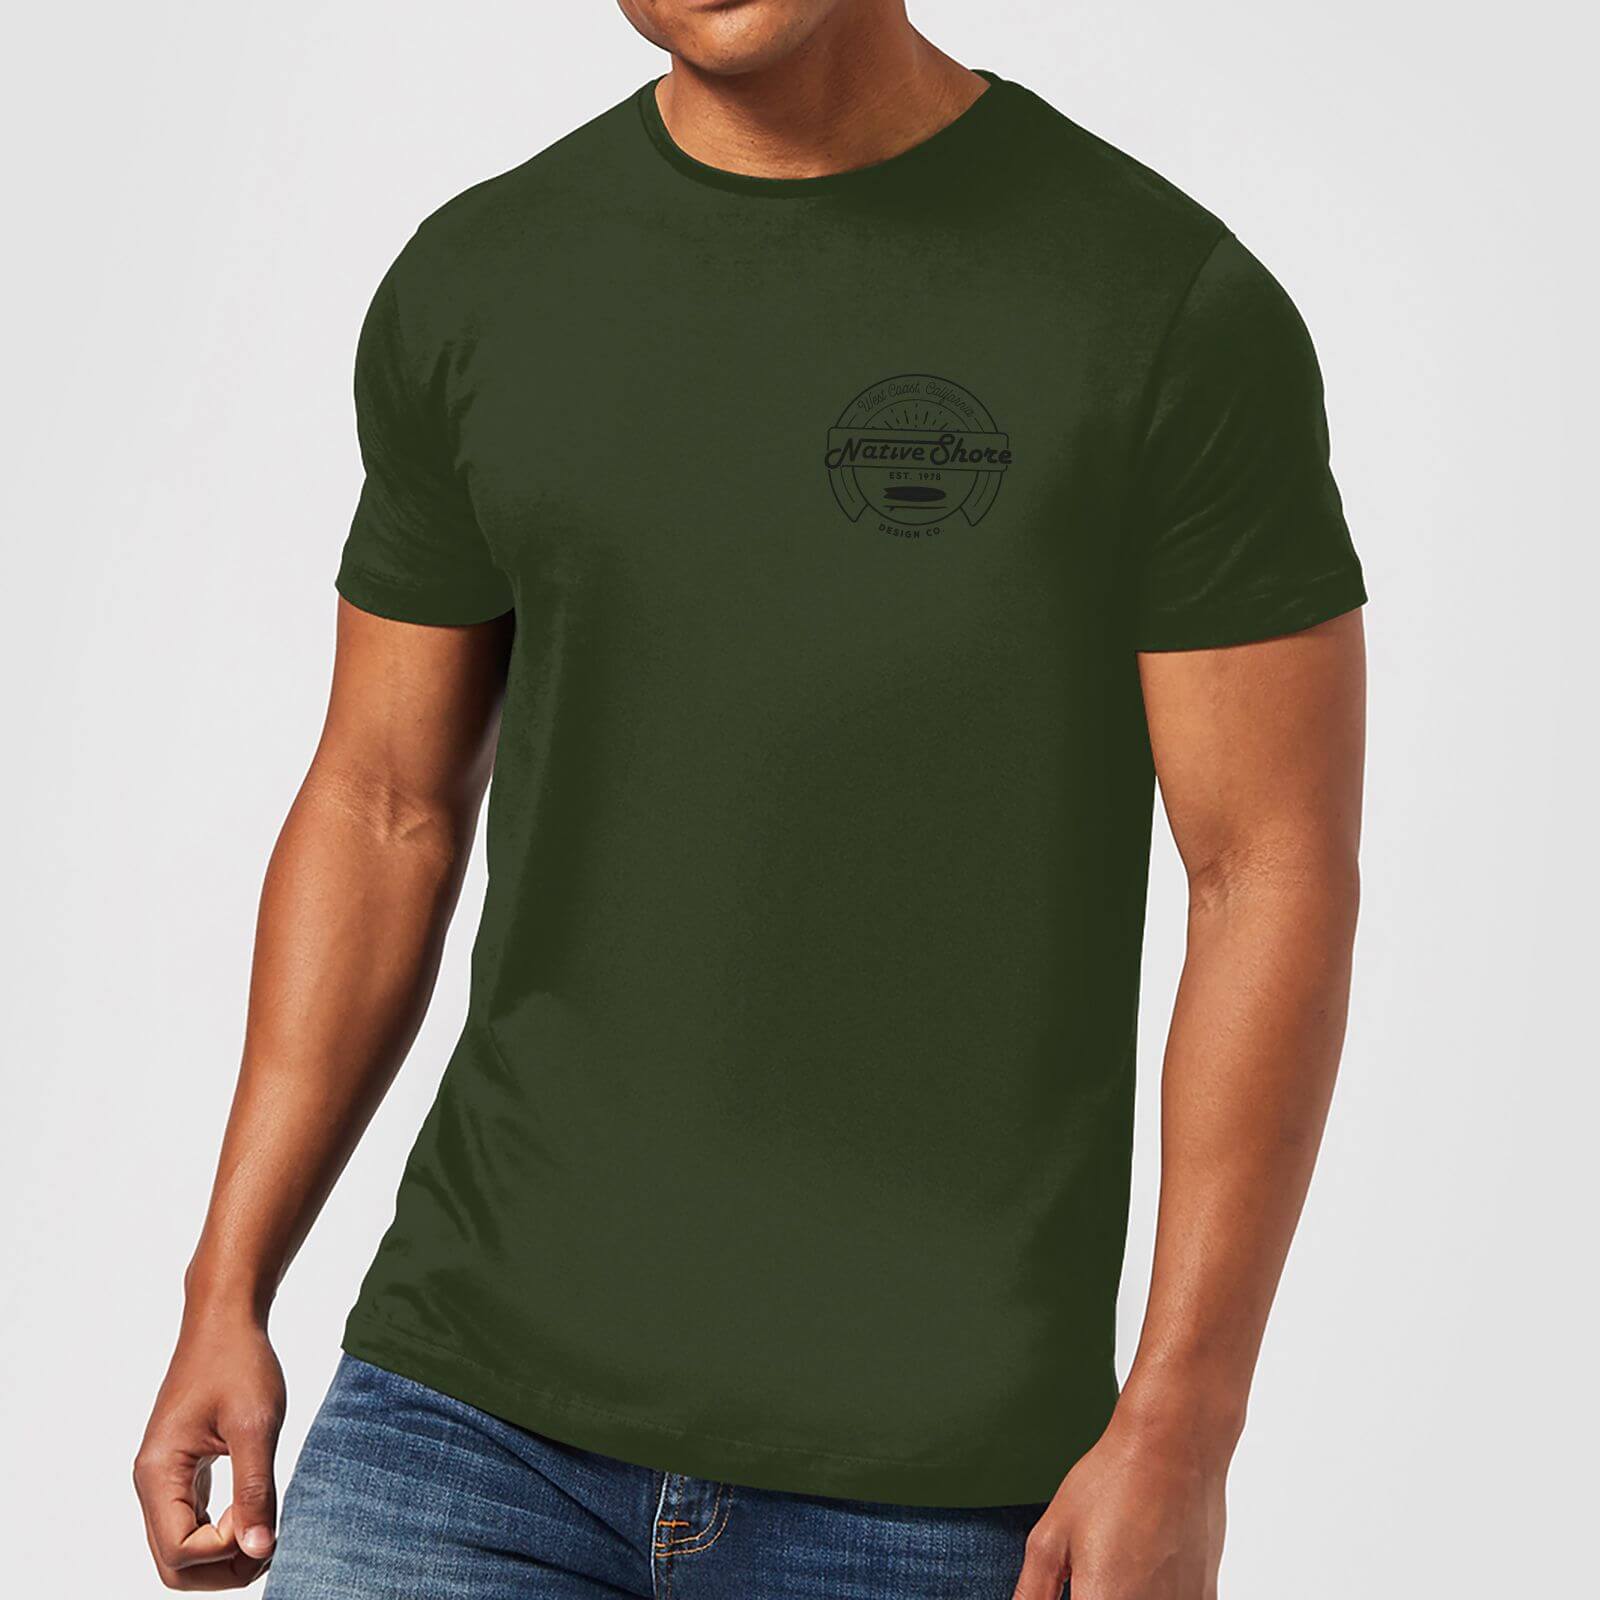 Native Shore Men's West Coast T-Shirt - Forest Green - M - Forest Green